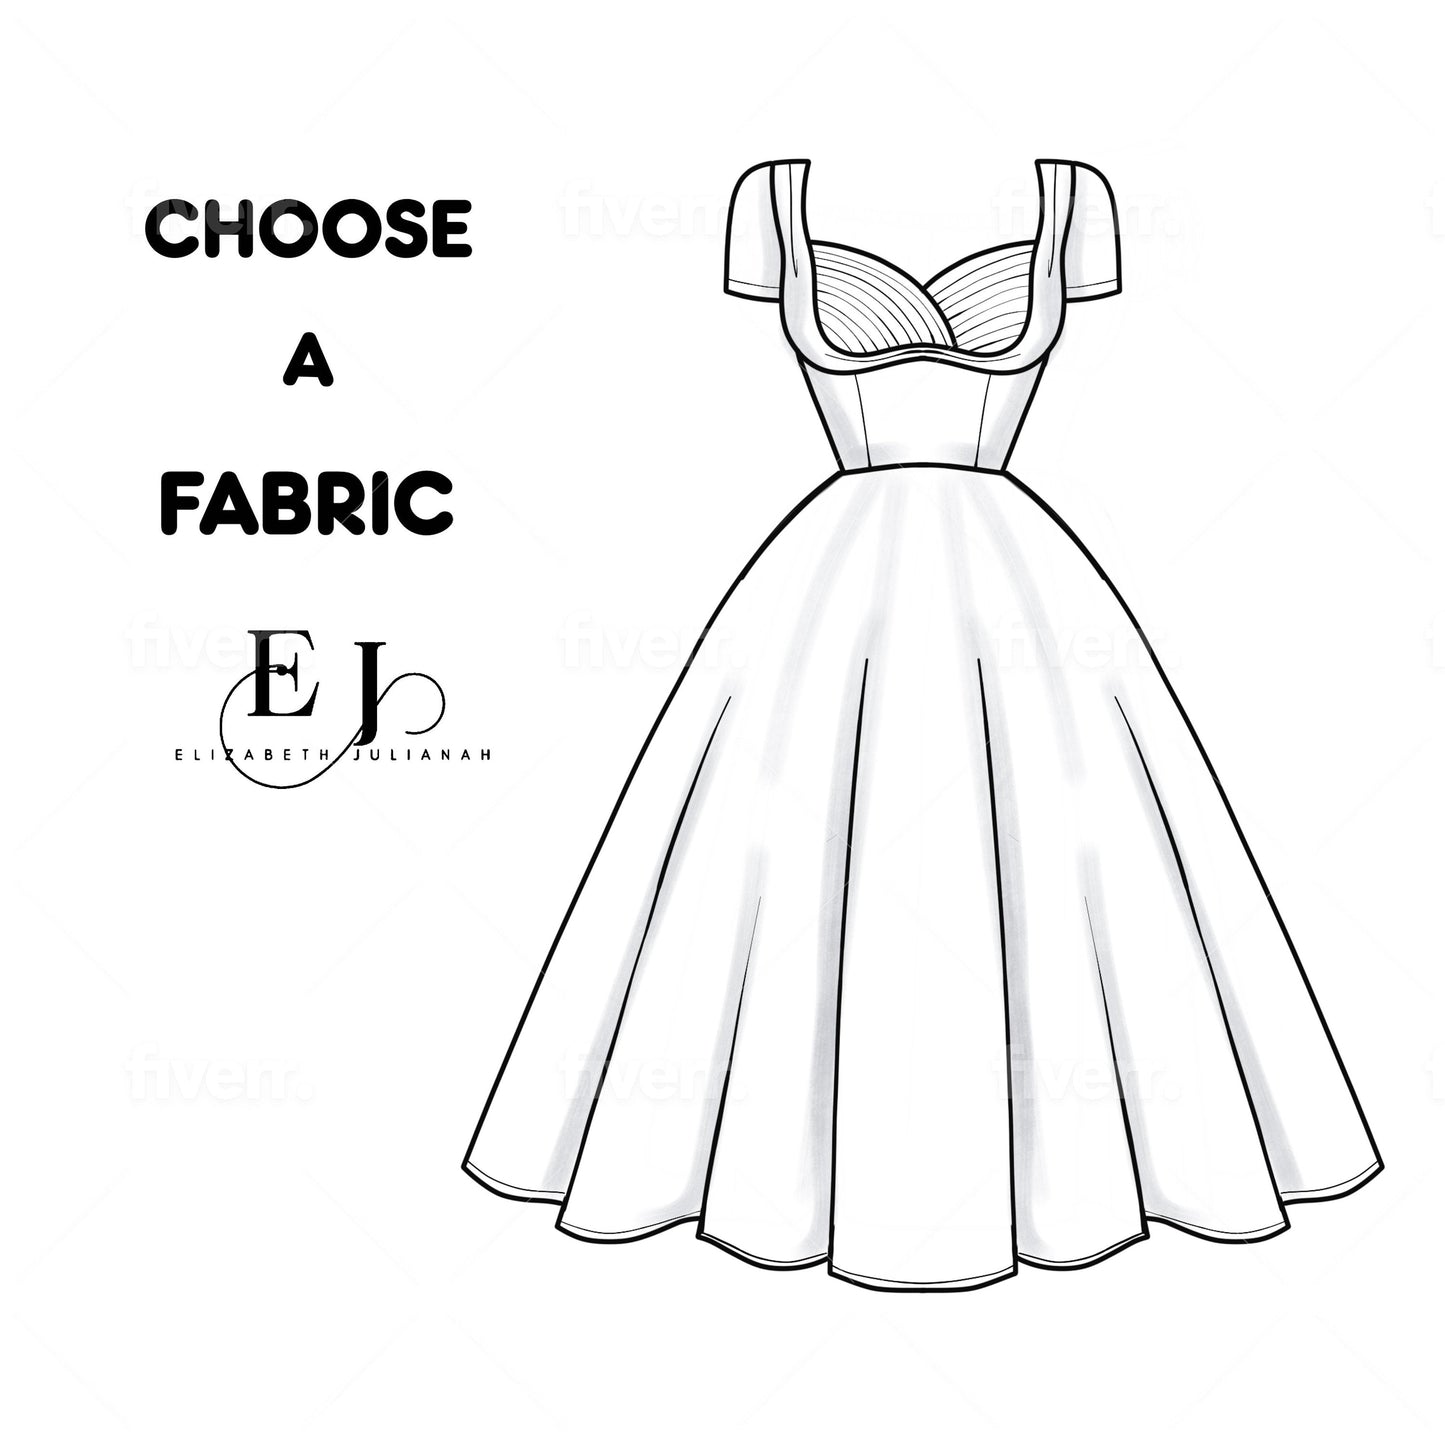 Choose a fabric